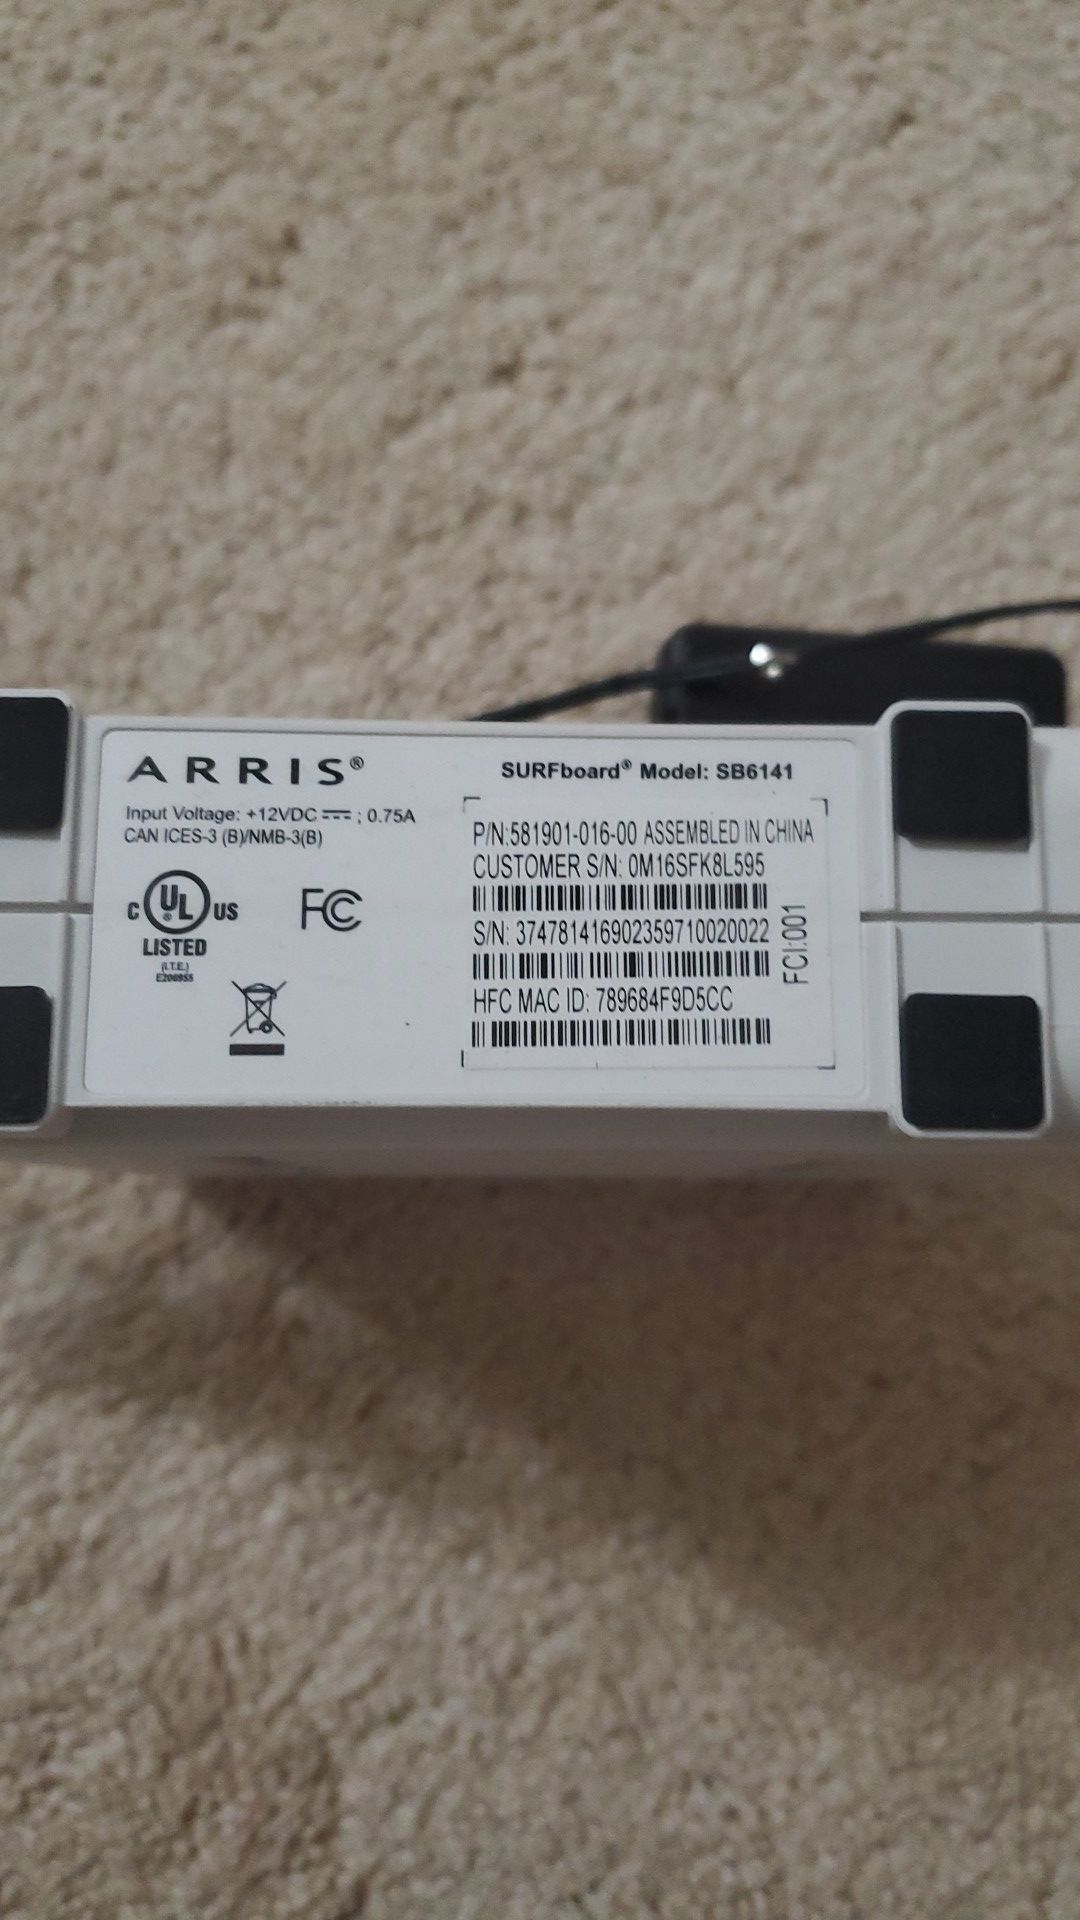 Arris surfboard sb6141 doscis 3.0 Comcast modem